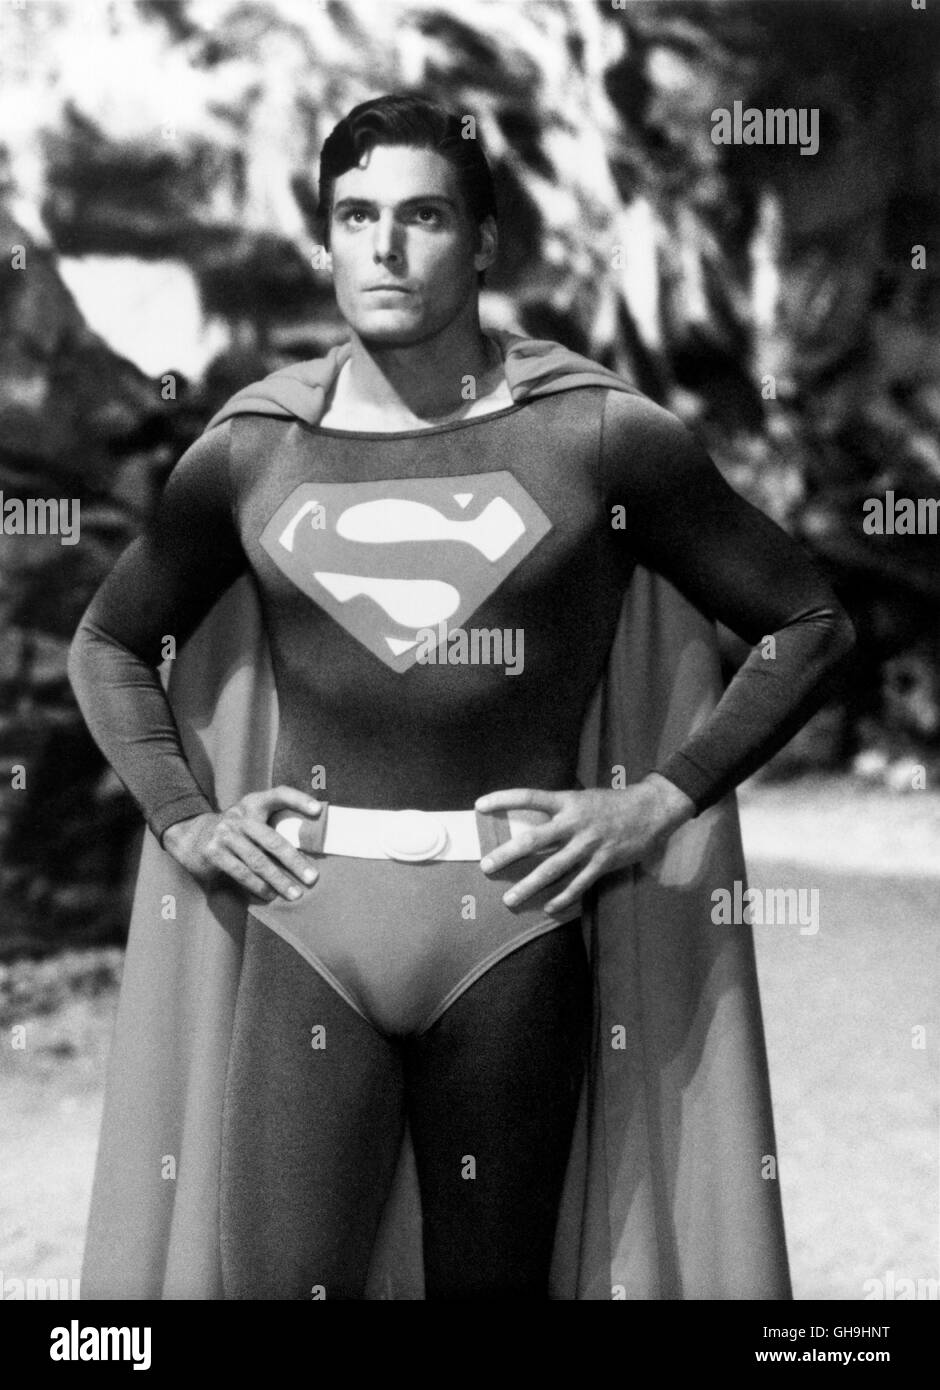 SUPERMAN III Superman III GB 1983 Richard Lester Clark Kent/Superman (CHRISTOPHER REEVE) Film, Fernsehen, Actionfilm, Science Fiction, 80er, Portrait Regie: Richard Lester aka. Superman III Stock Photo